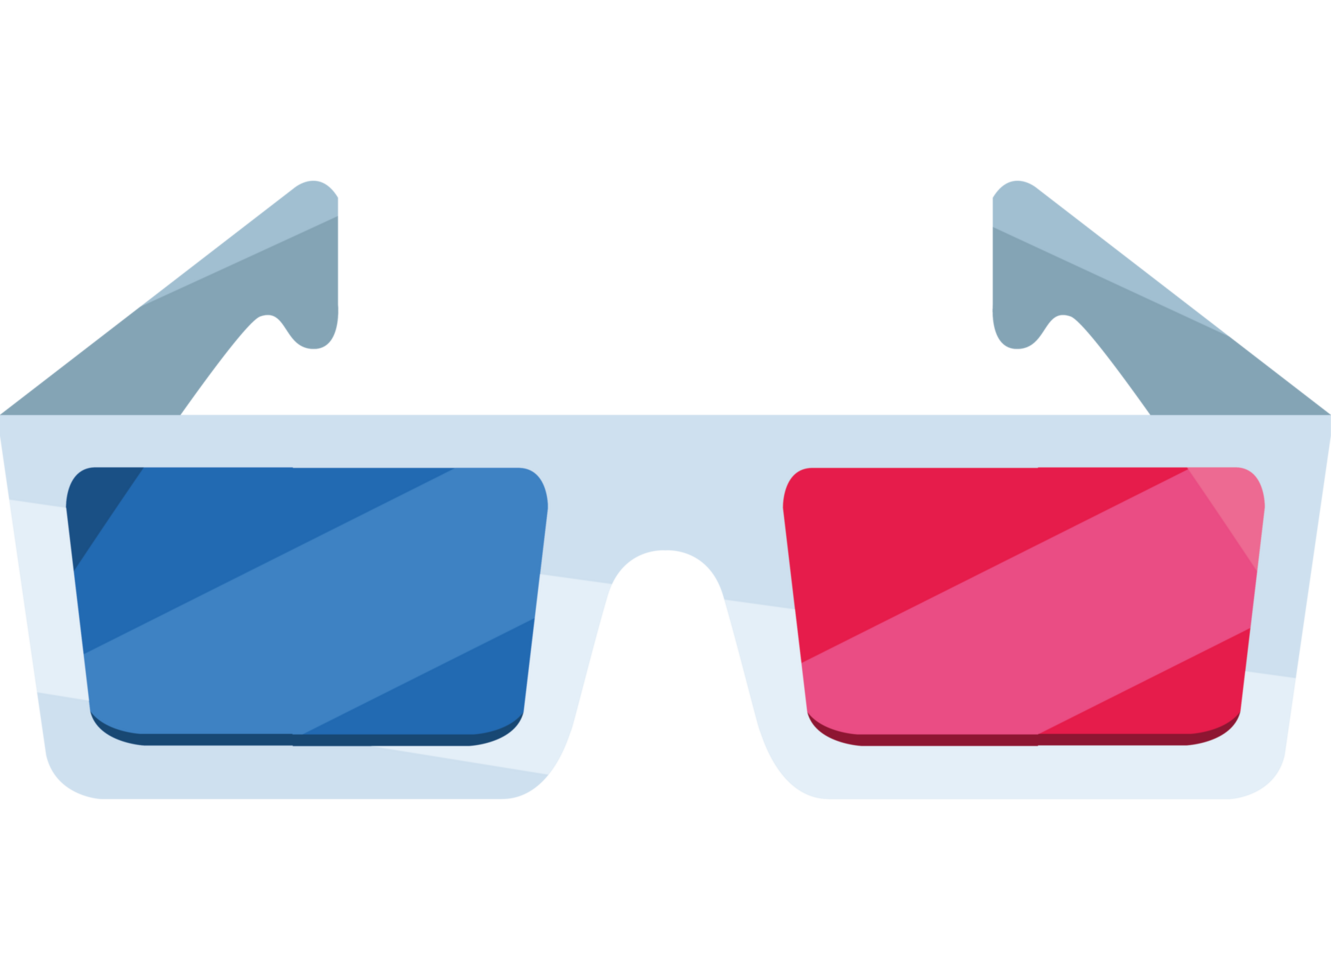 3D Glasses PNG Image File